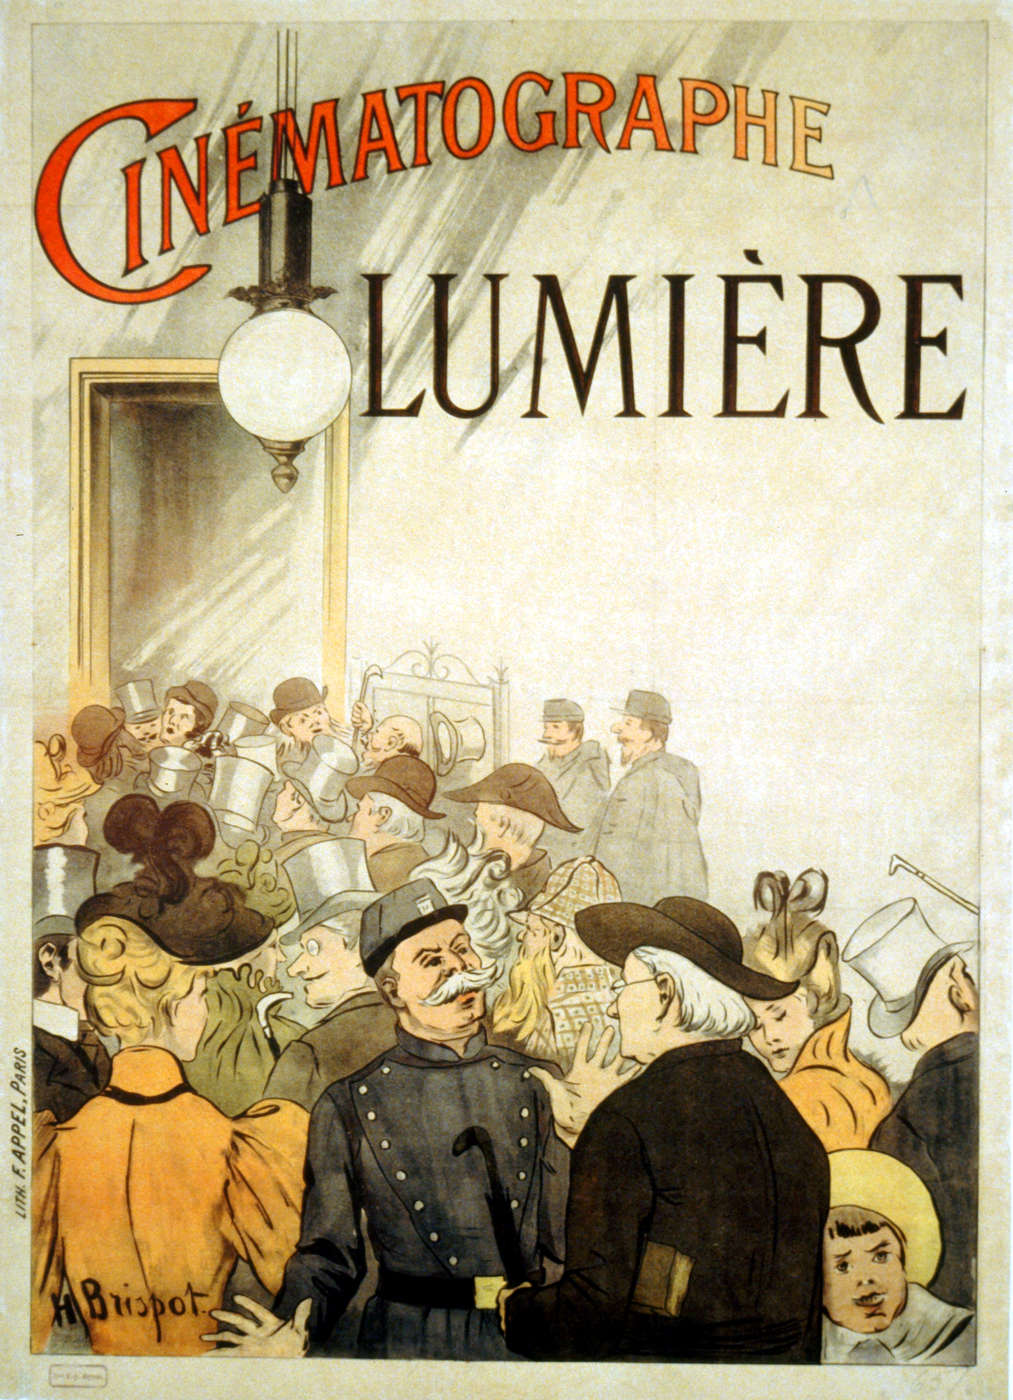 Cinematograph_Lumiere_advertisement_1895